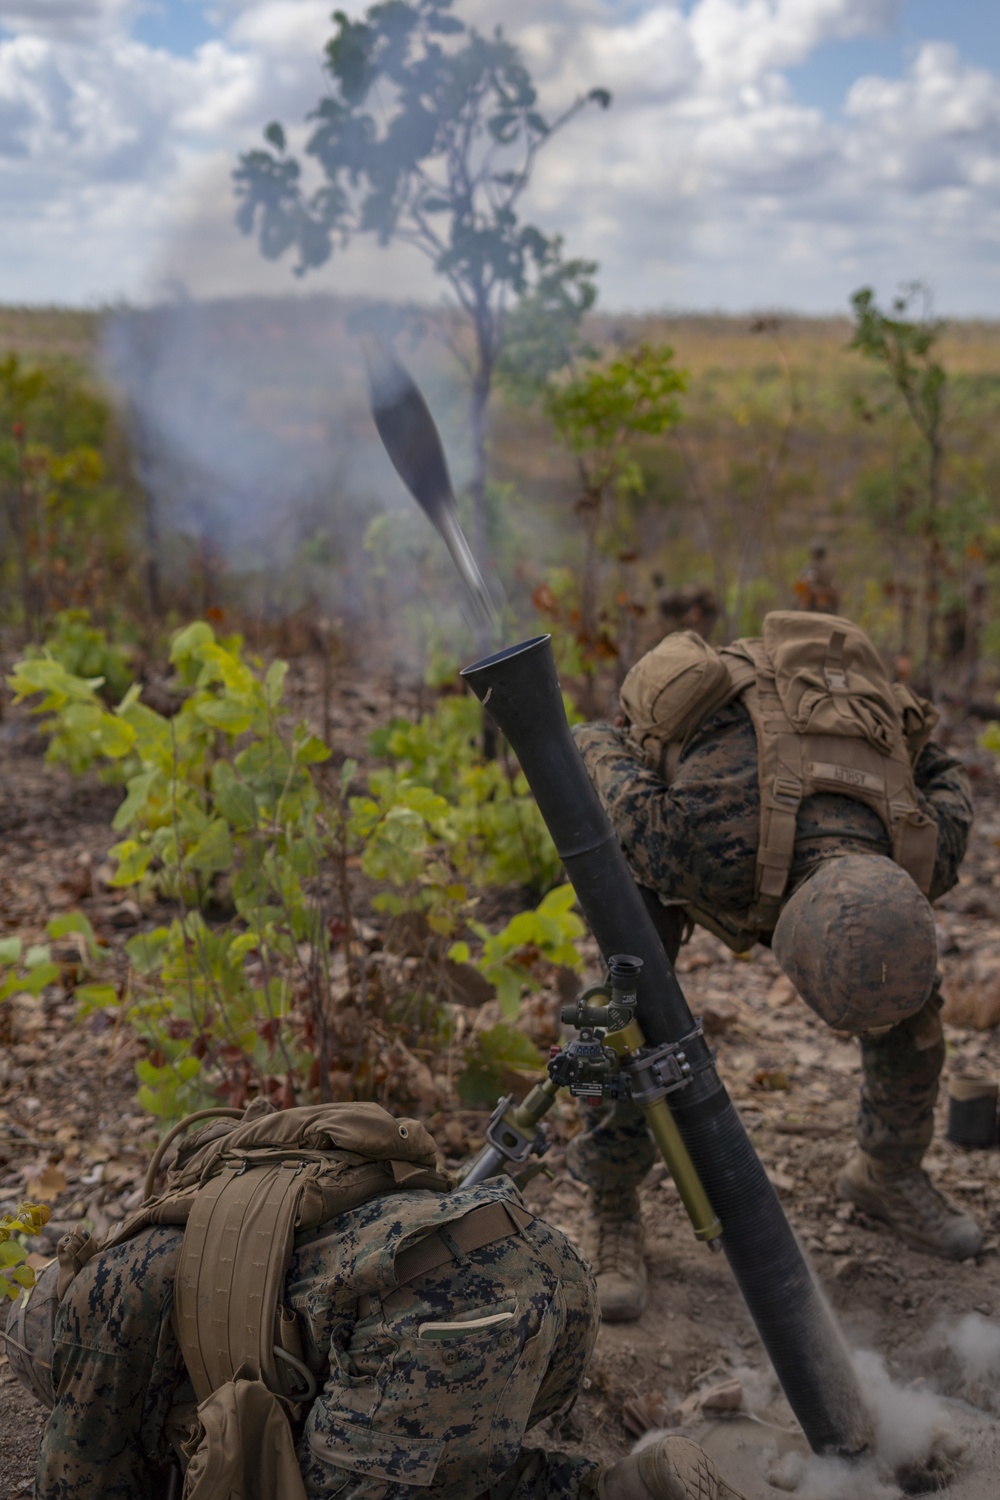 Release the Kraken! - Marines fire 81mm mortars in Australia